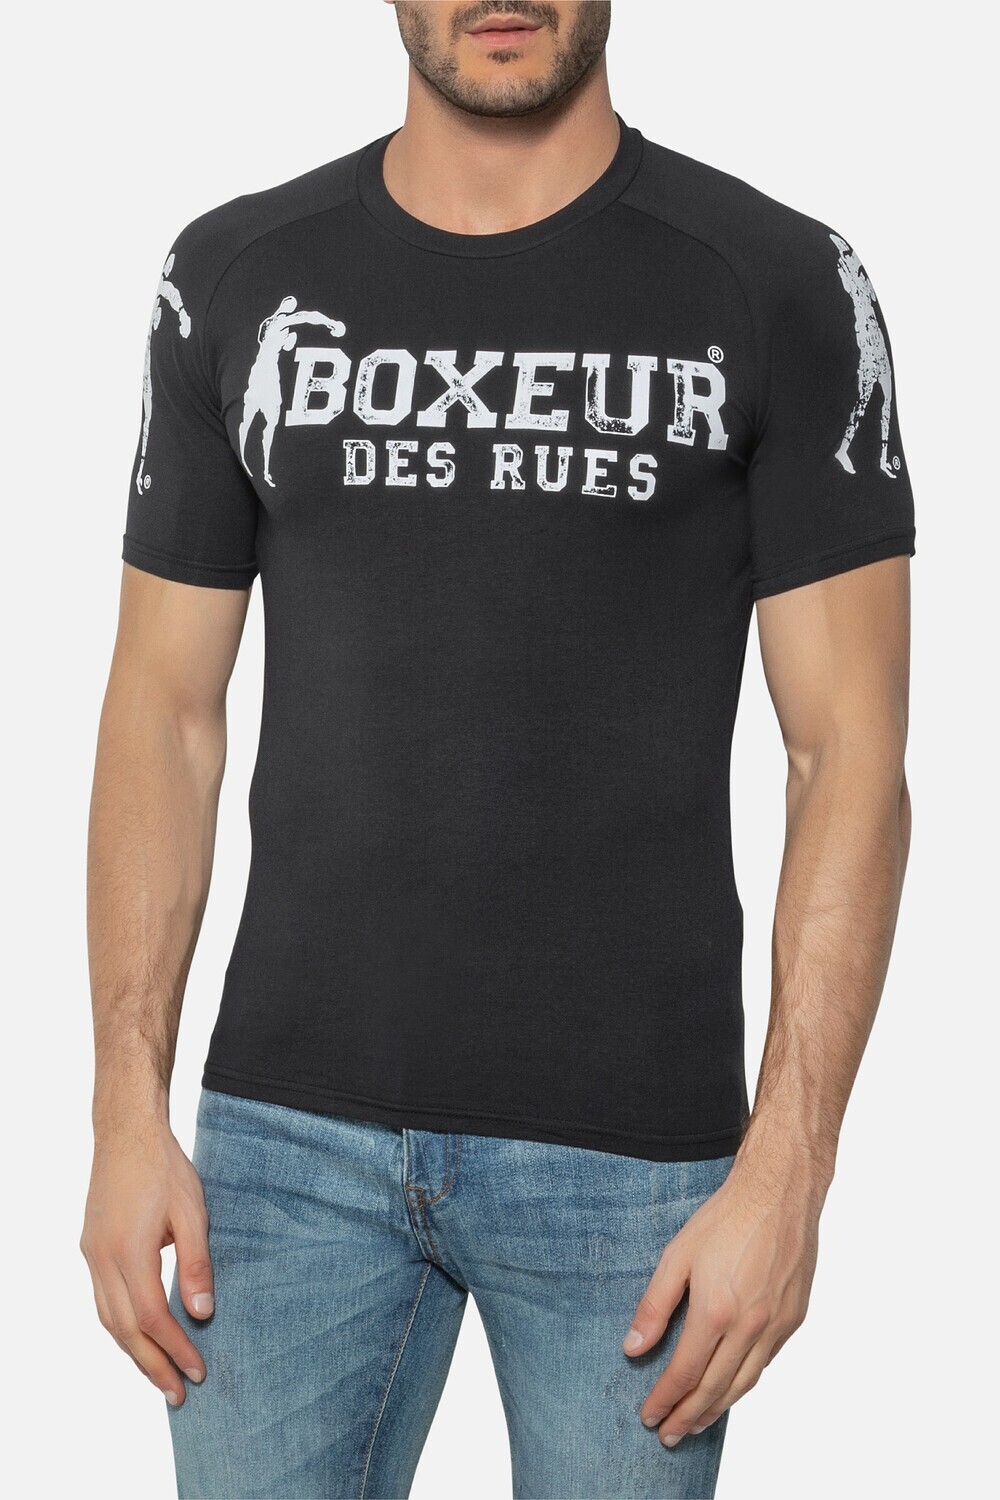 Футболка "Boxeur", Raglan T-shirt, Black, Boxeur Des Rue